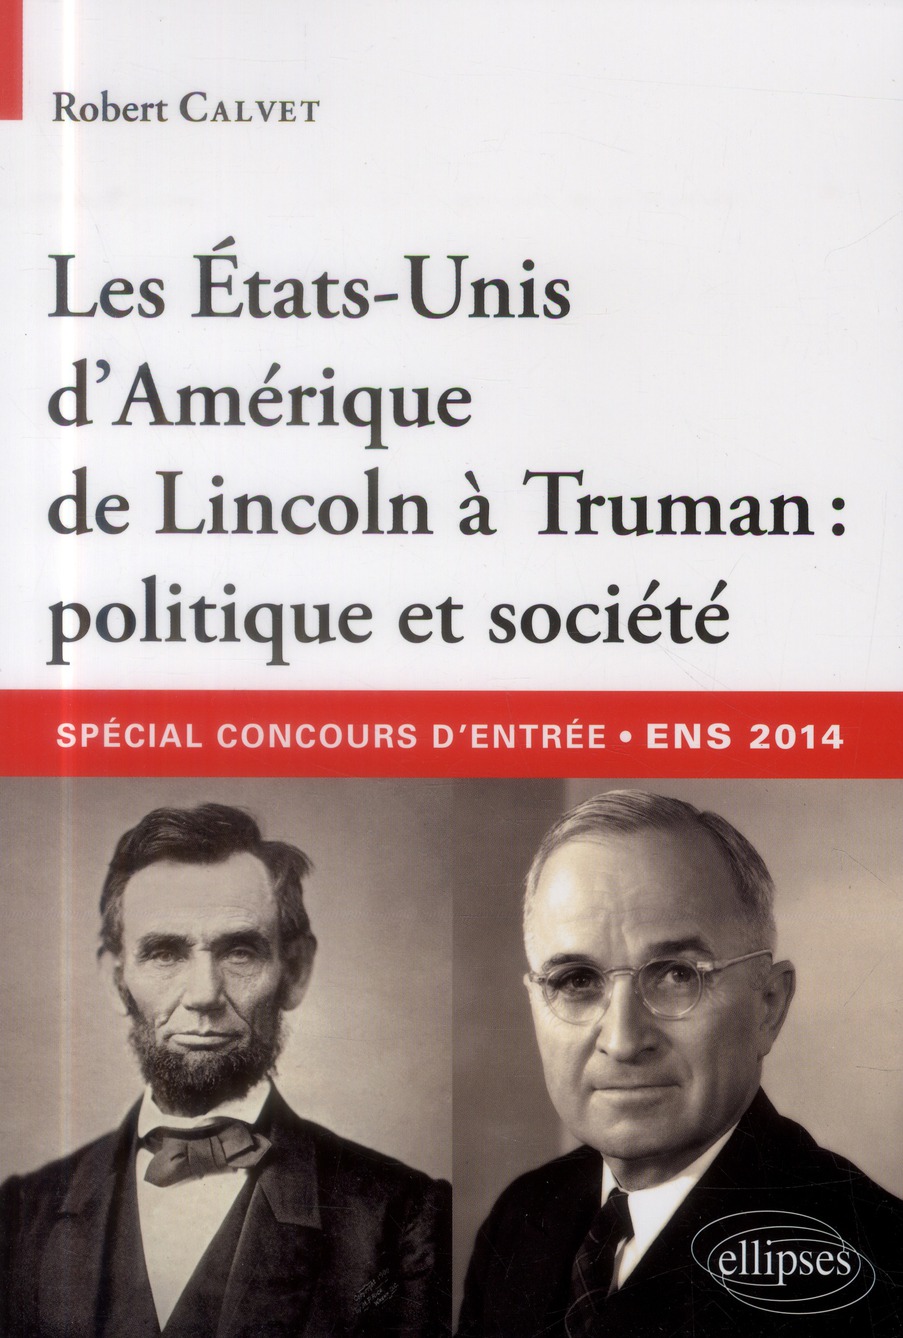 LES ETATS-UNIS D AMERIQUE DE LINCOLN A TRUMAN : POLITIQUE ET SOCIETEA ASPECIAL CONCOURS D ENTREE COM